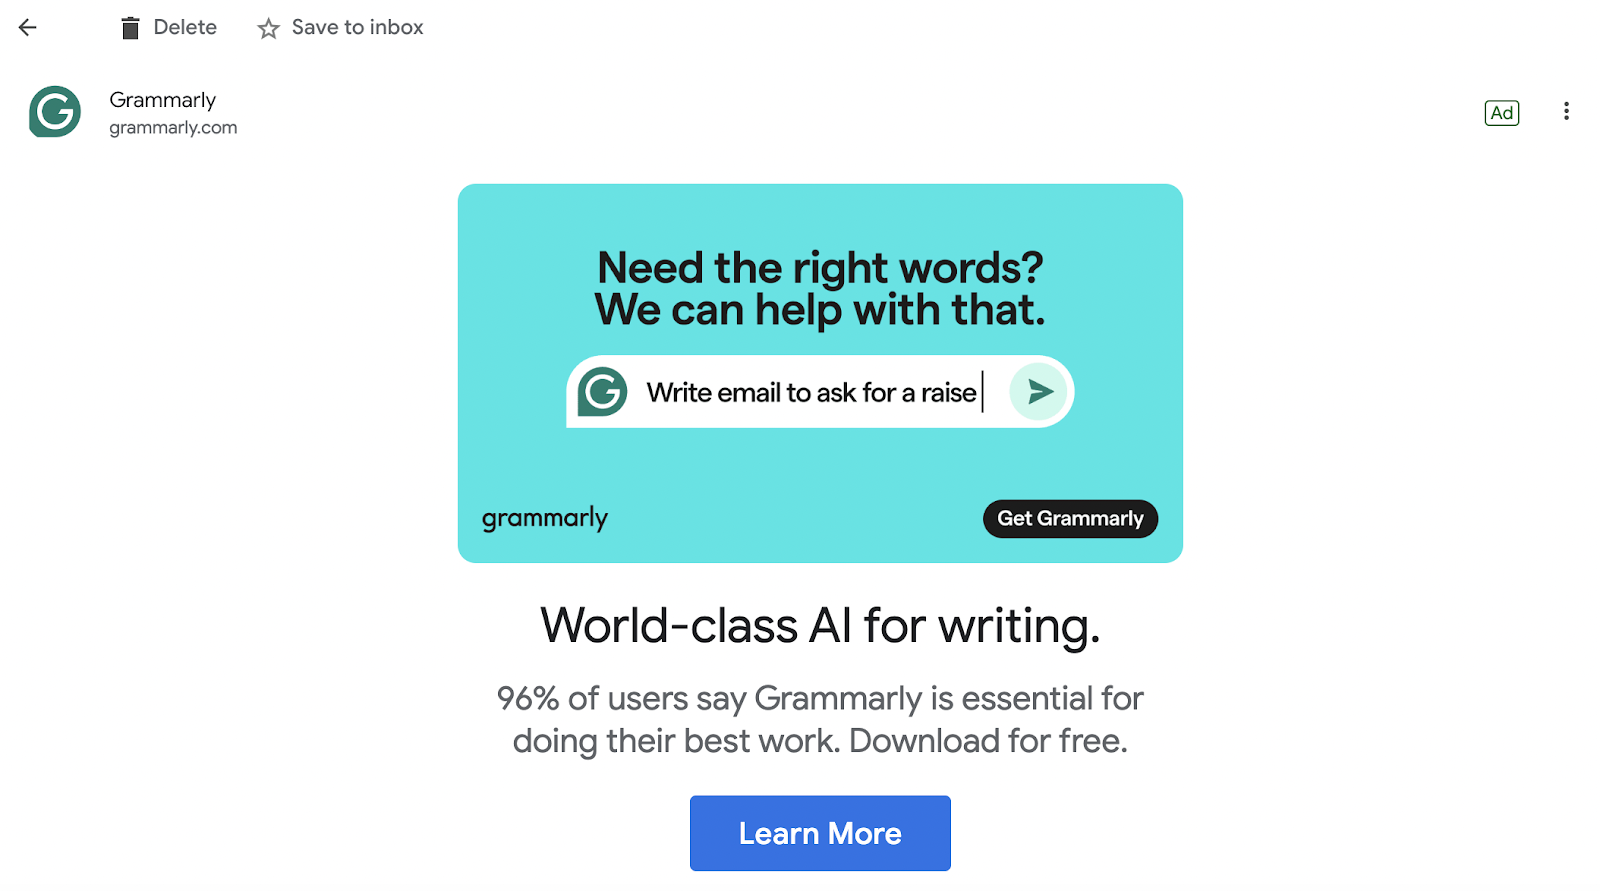 Grammarly / ad description